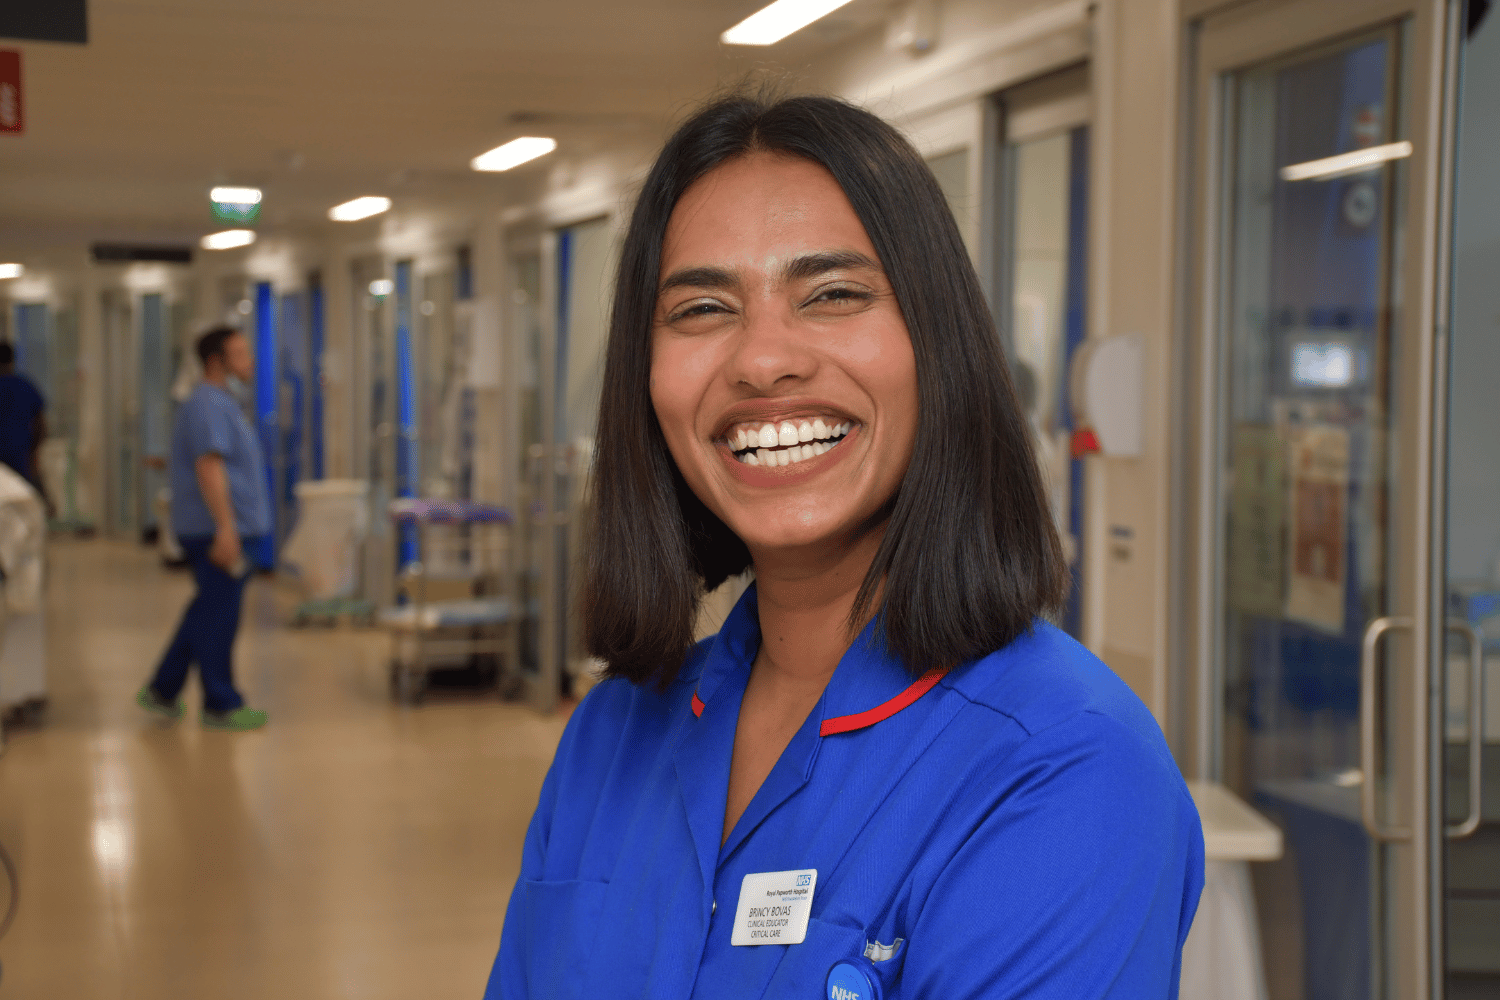 Brincy wearing a blue nurses uniform, smiling in a hospital corridor.